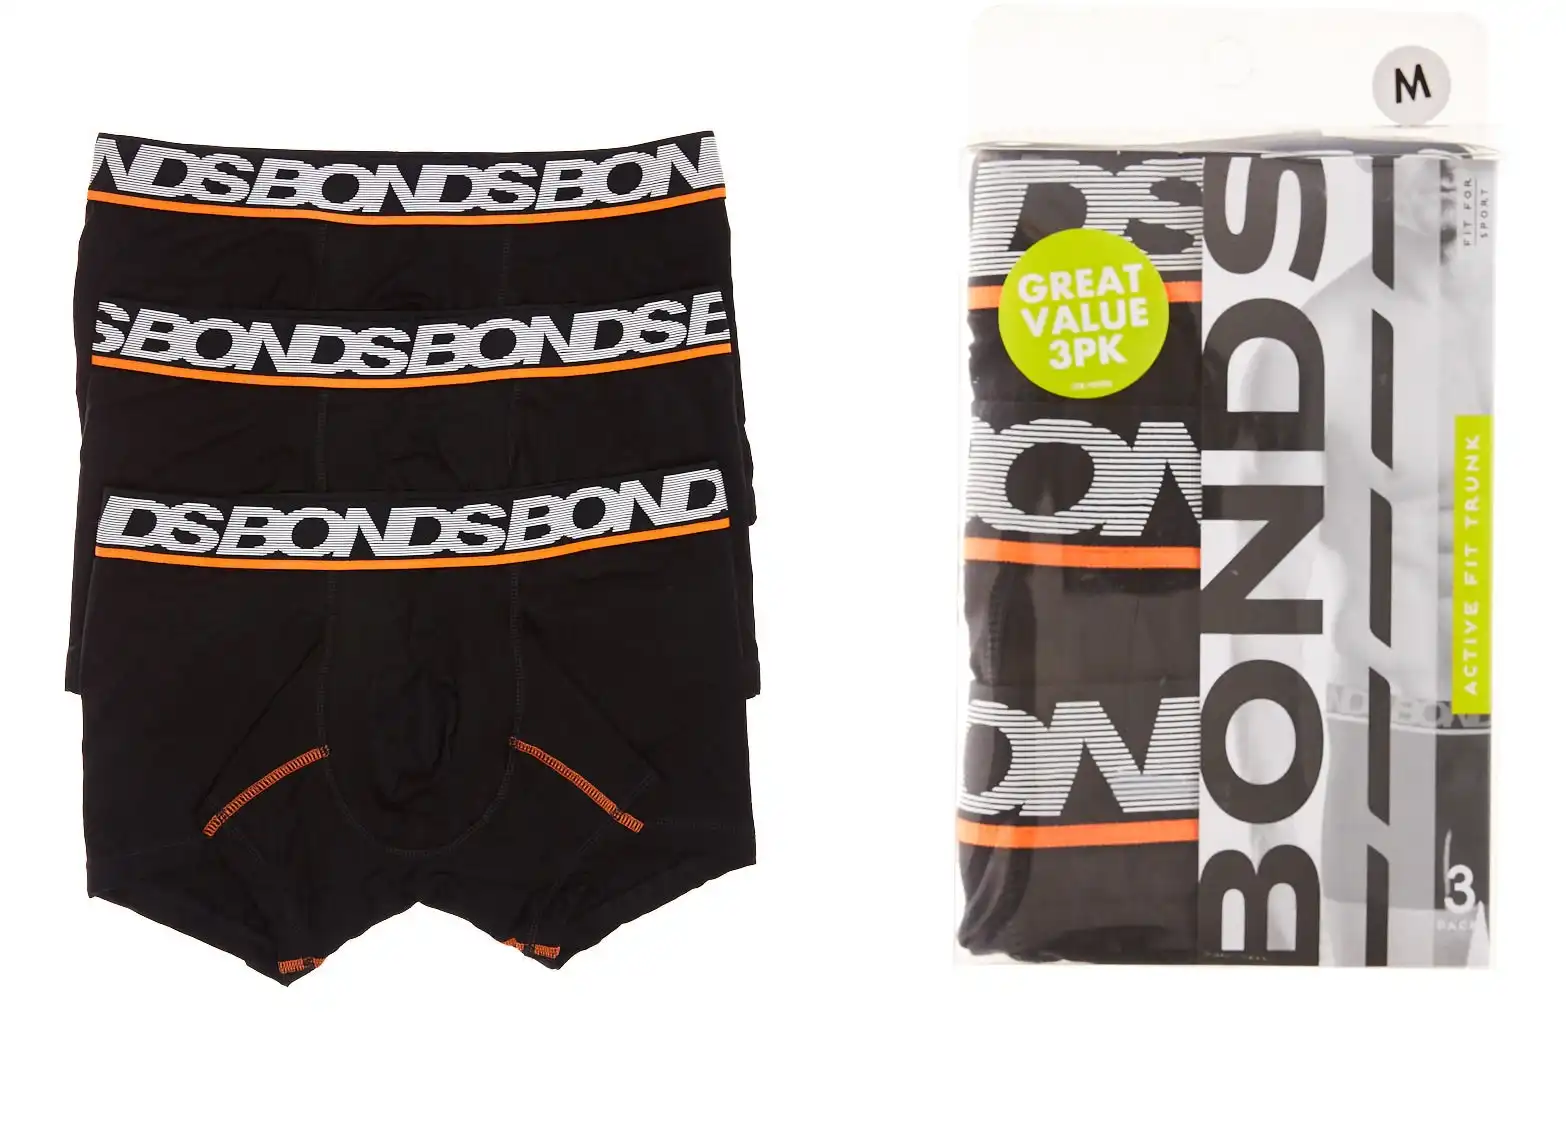 3 x Bonds Active Fit Trunks - Underwear Trunks Jocks